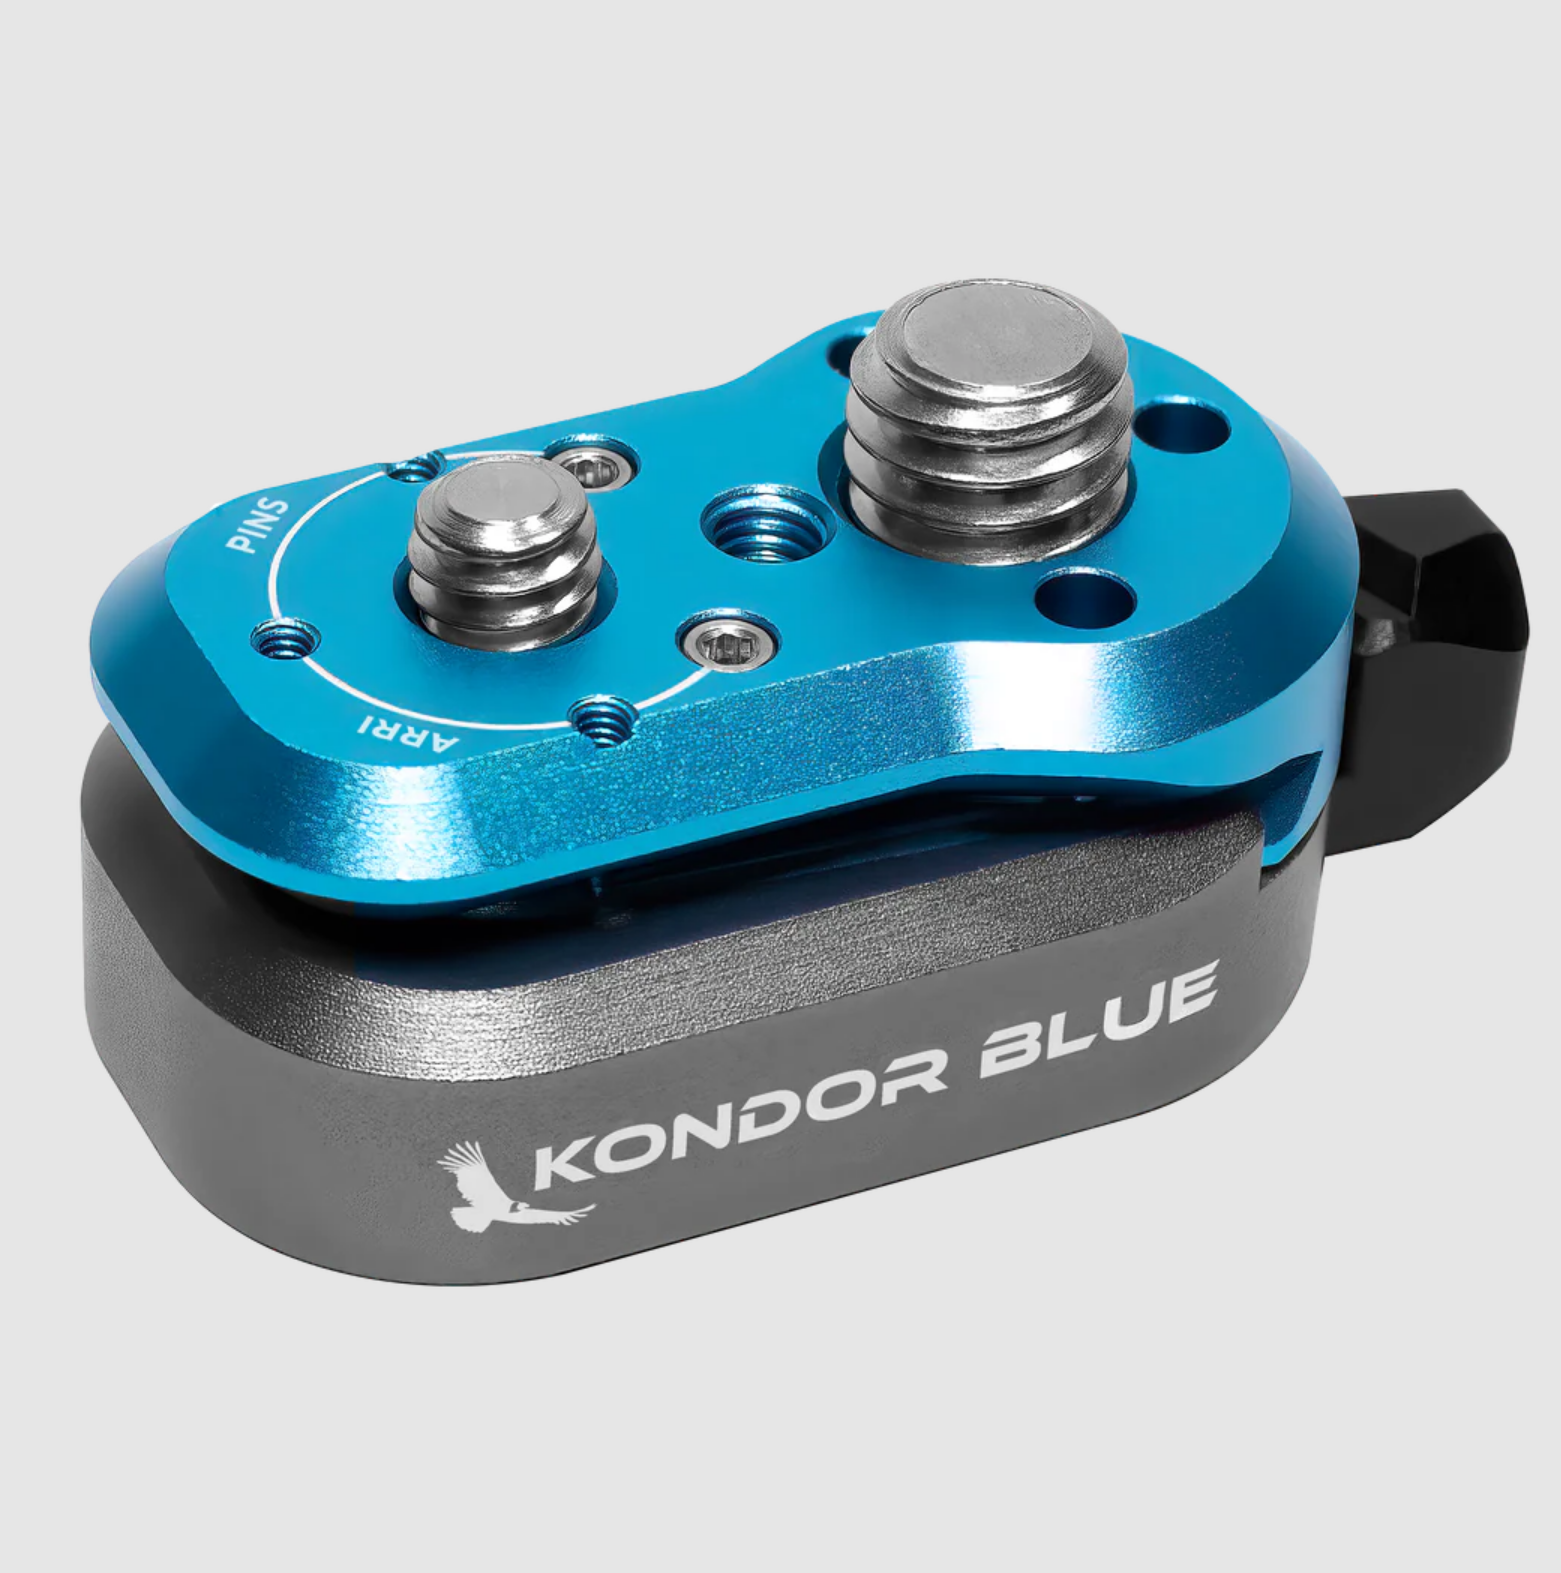 Kondor Blue Mini Lock Quick Release Plates for Professional Camera Workflows (Kondor Blue)